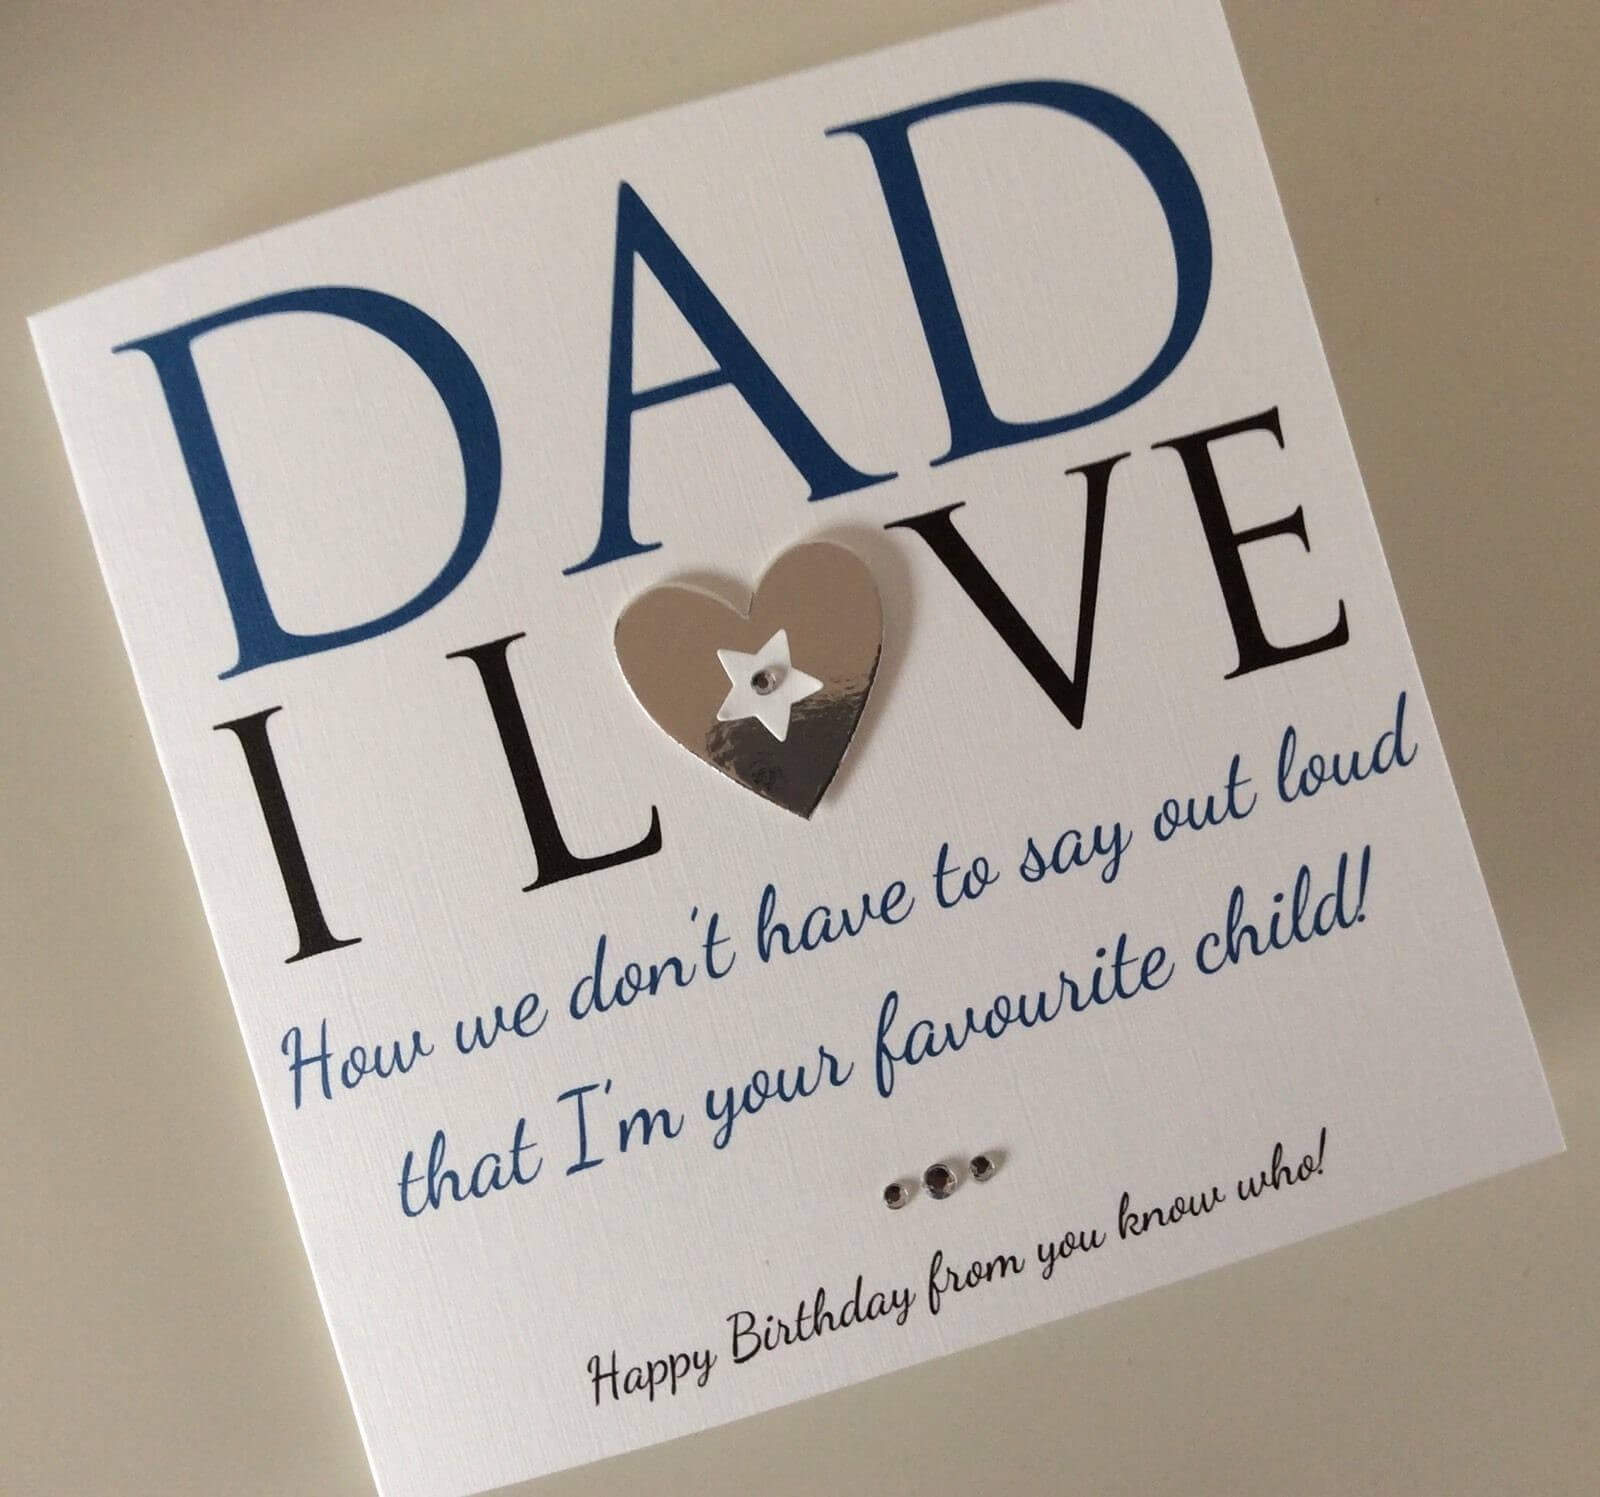 Happy Birthday Dad Card Ideas 98 Birthday Greetings Cards For Dad Dad Birthday Card From Kids